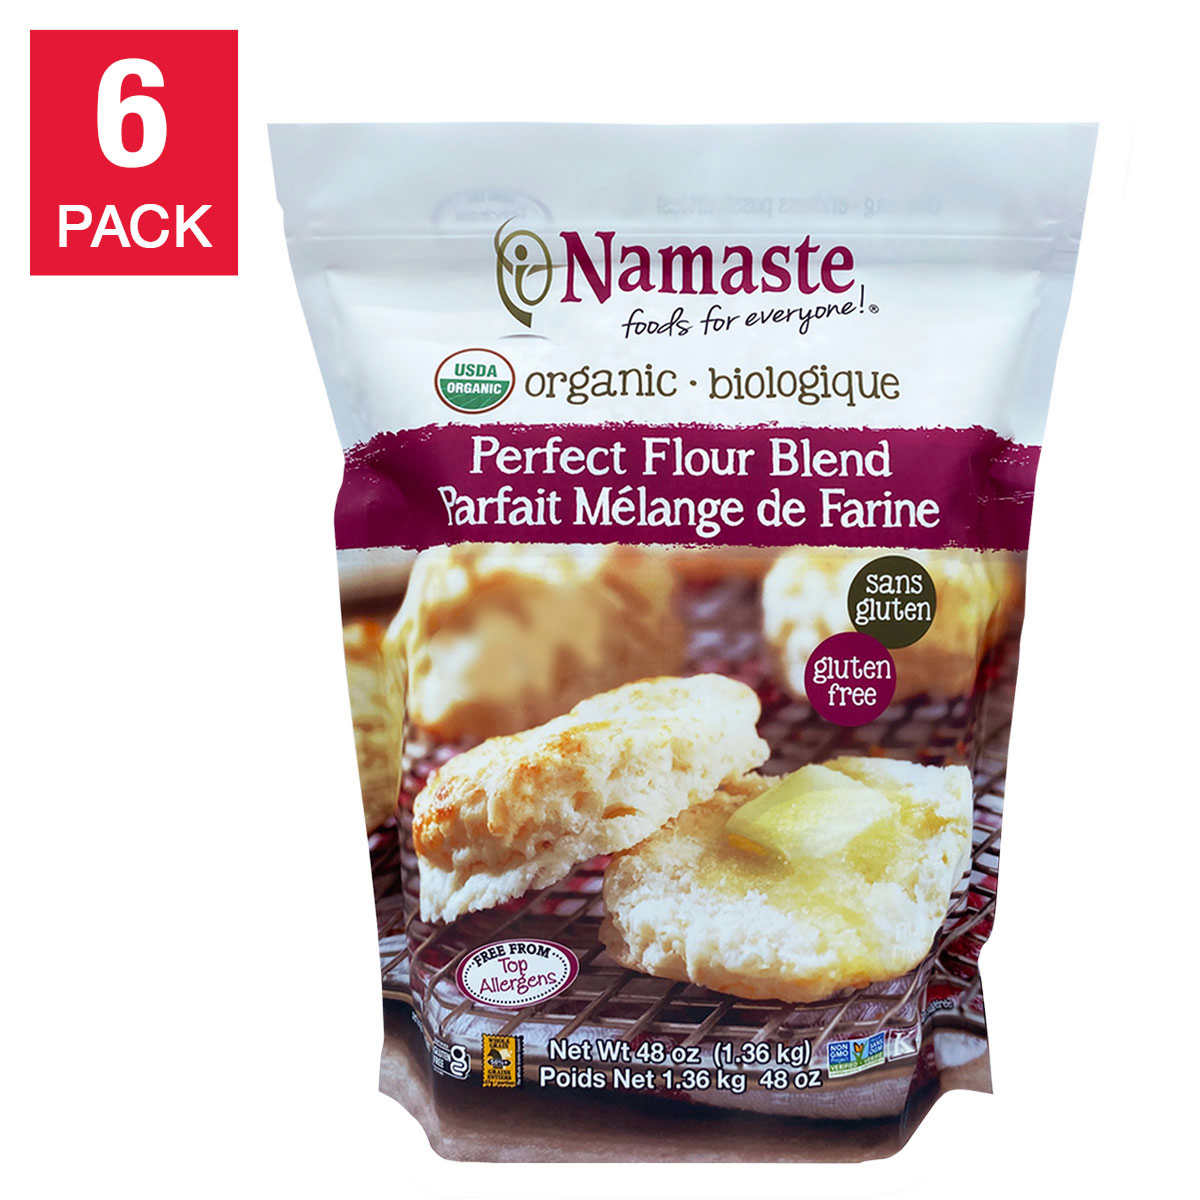 Namaste USDA Organic Gluten Free Perfect Flour Blend